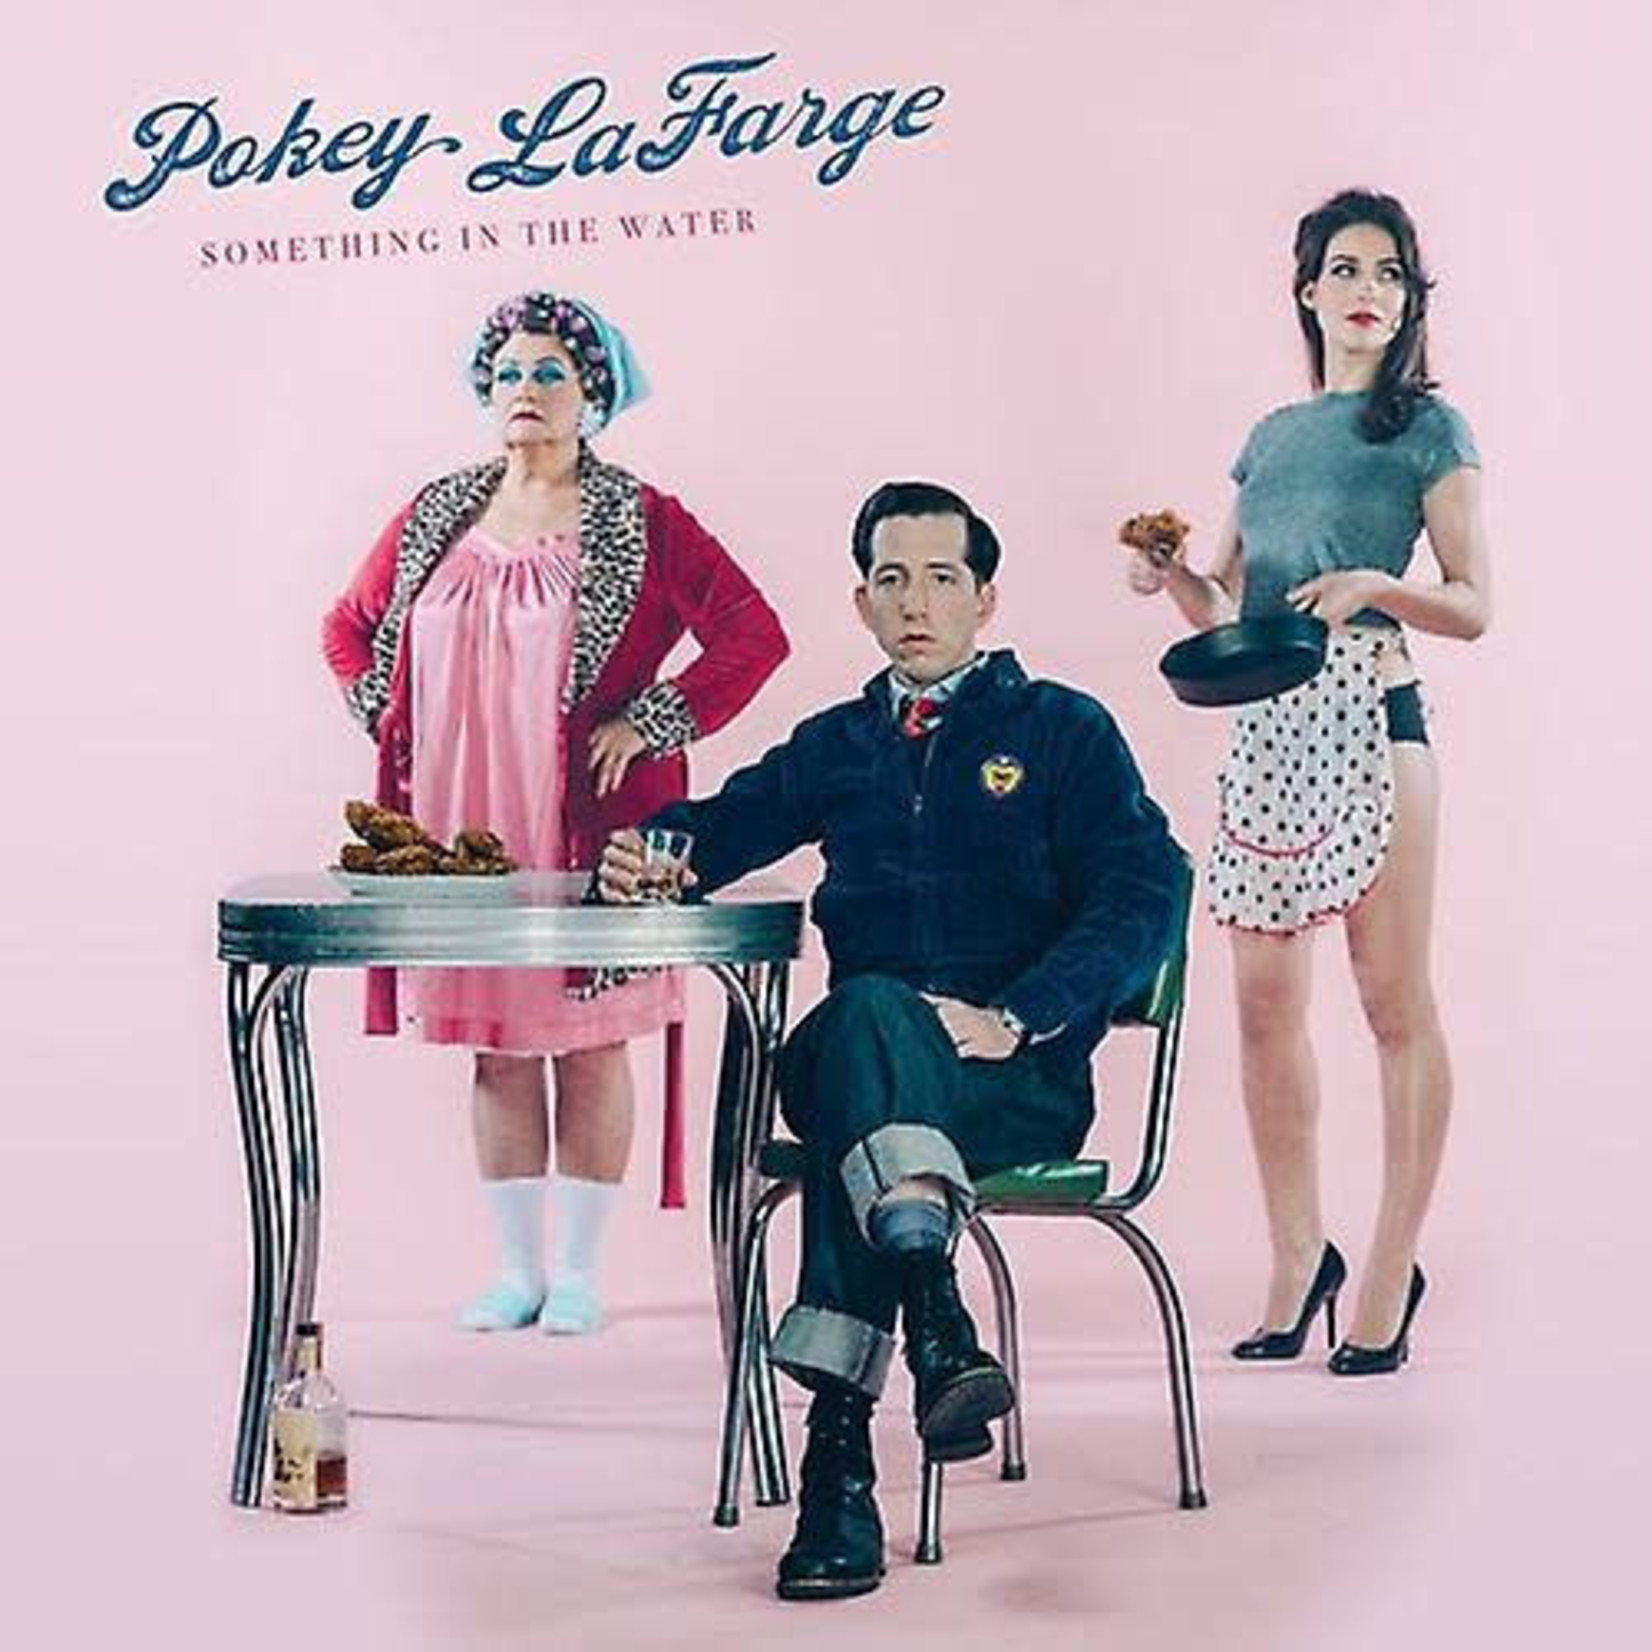 Rounder Pokey LaFarge - Something In The Water (LP)